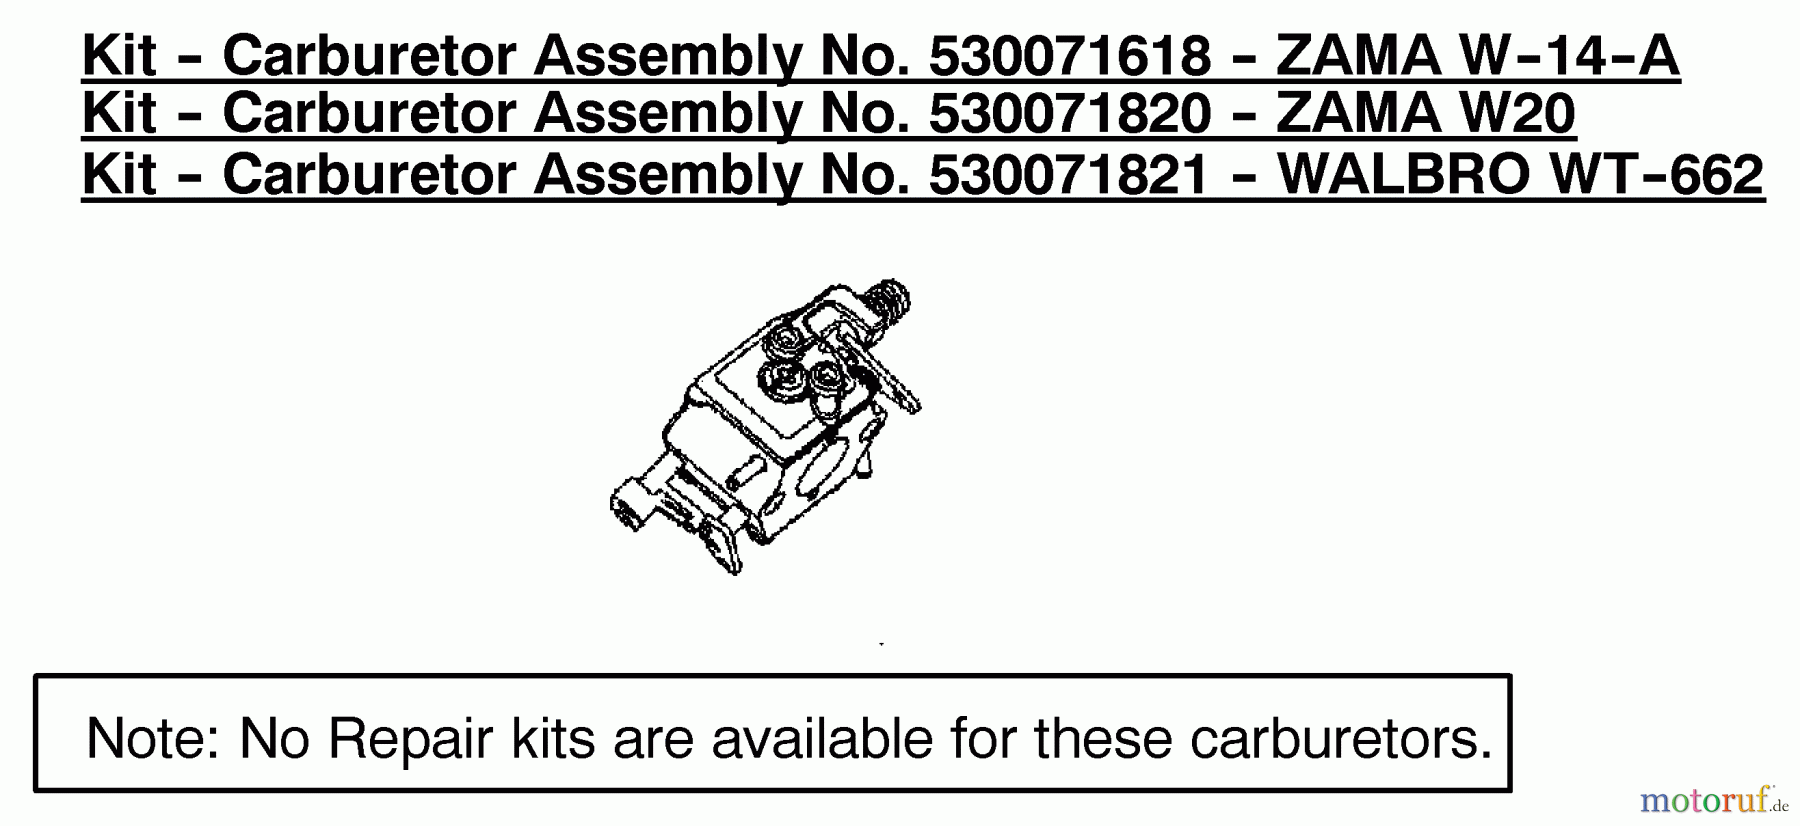  Poulan / Weed Eater Motorsägen 1975 (Type 3) - Poulan Woodshark Chainsaw Carburetor Assembly (Zama W-14-A) P/N 530071618